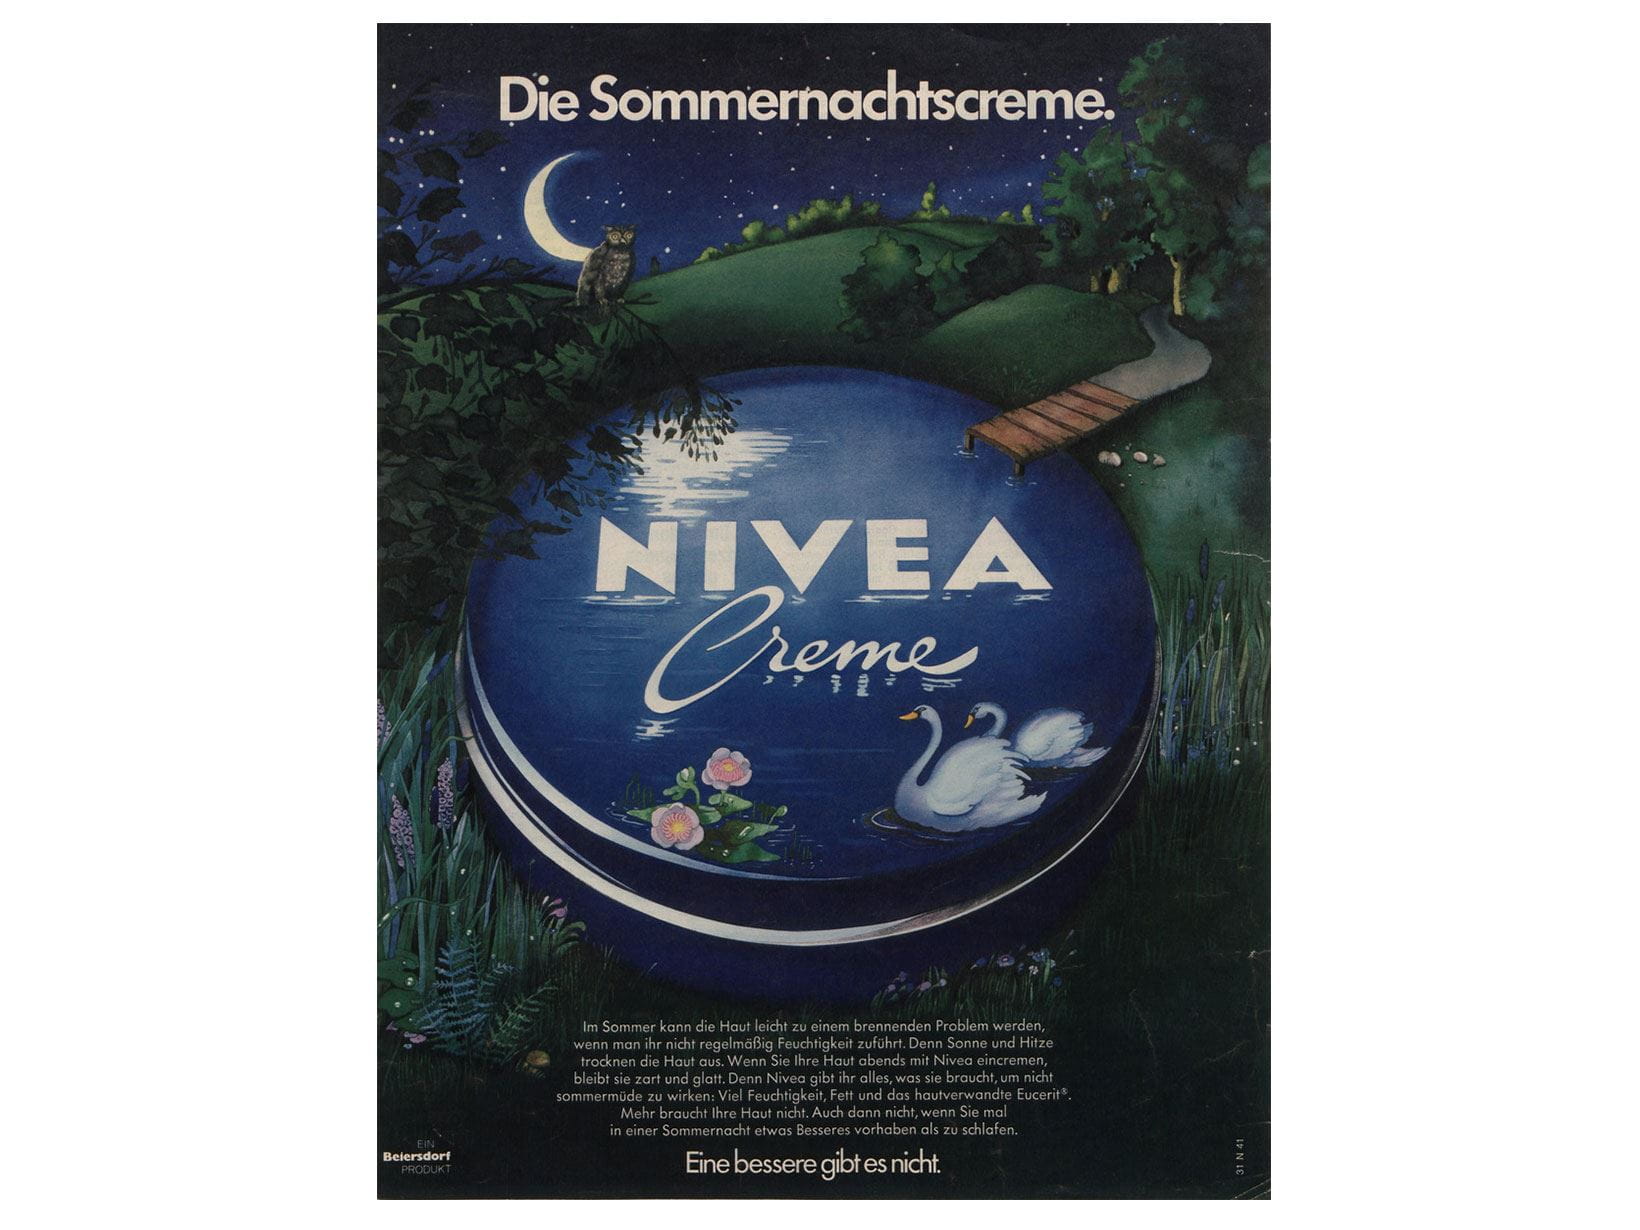 Реклама NIVEA, 1974 г.